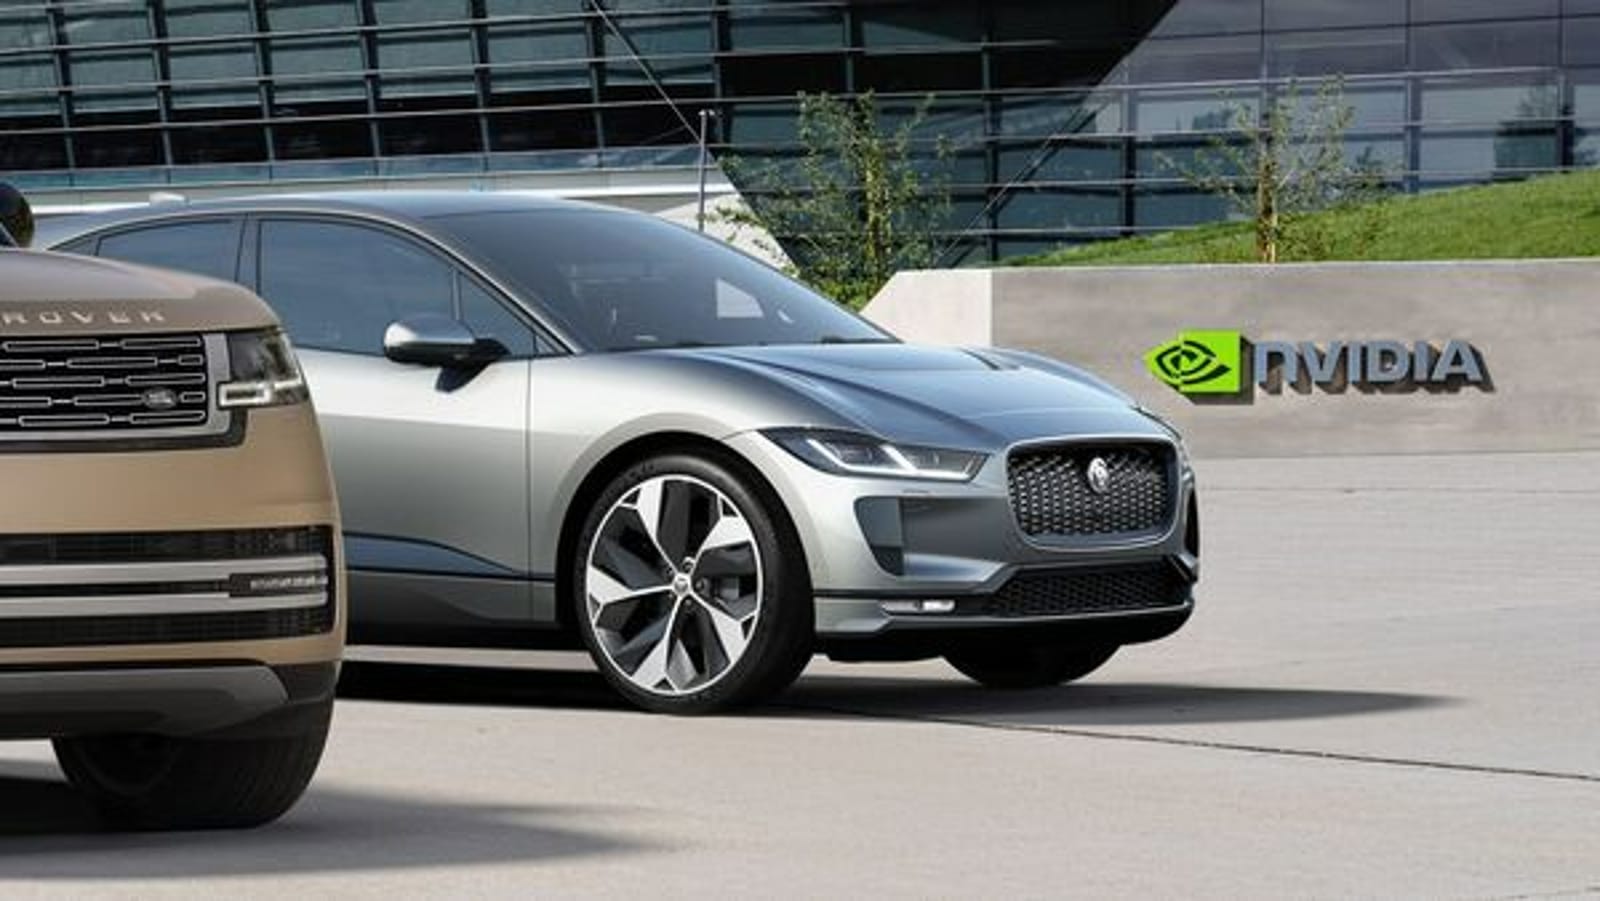 NVIDIA Drive: ecco le nuove Jaguar Land Rover